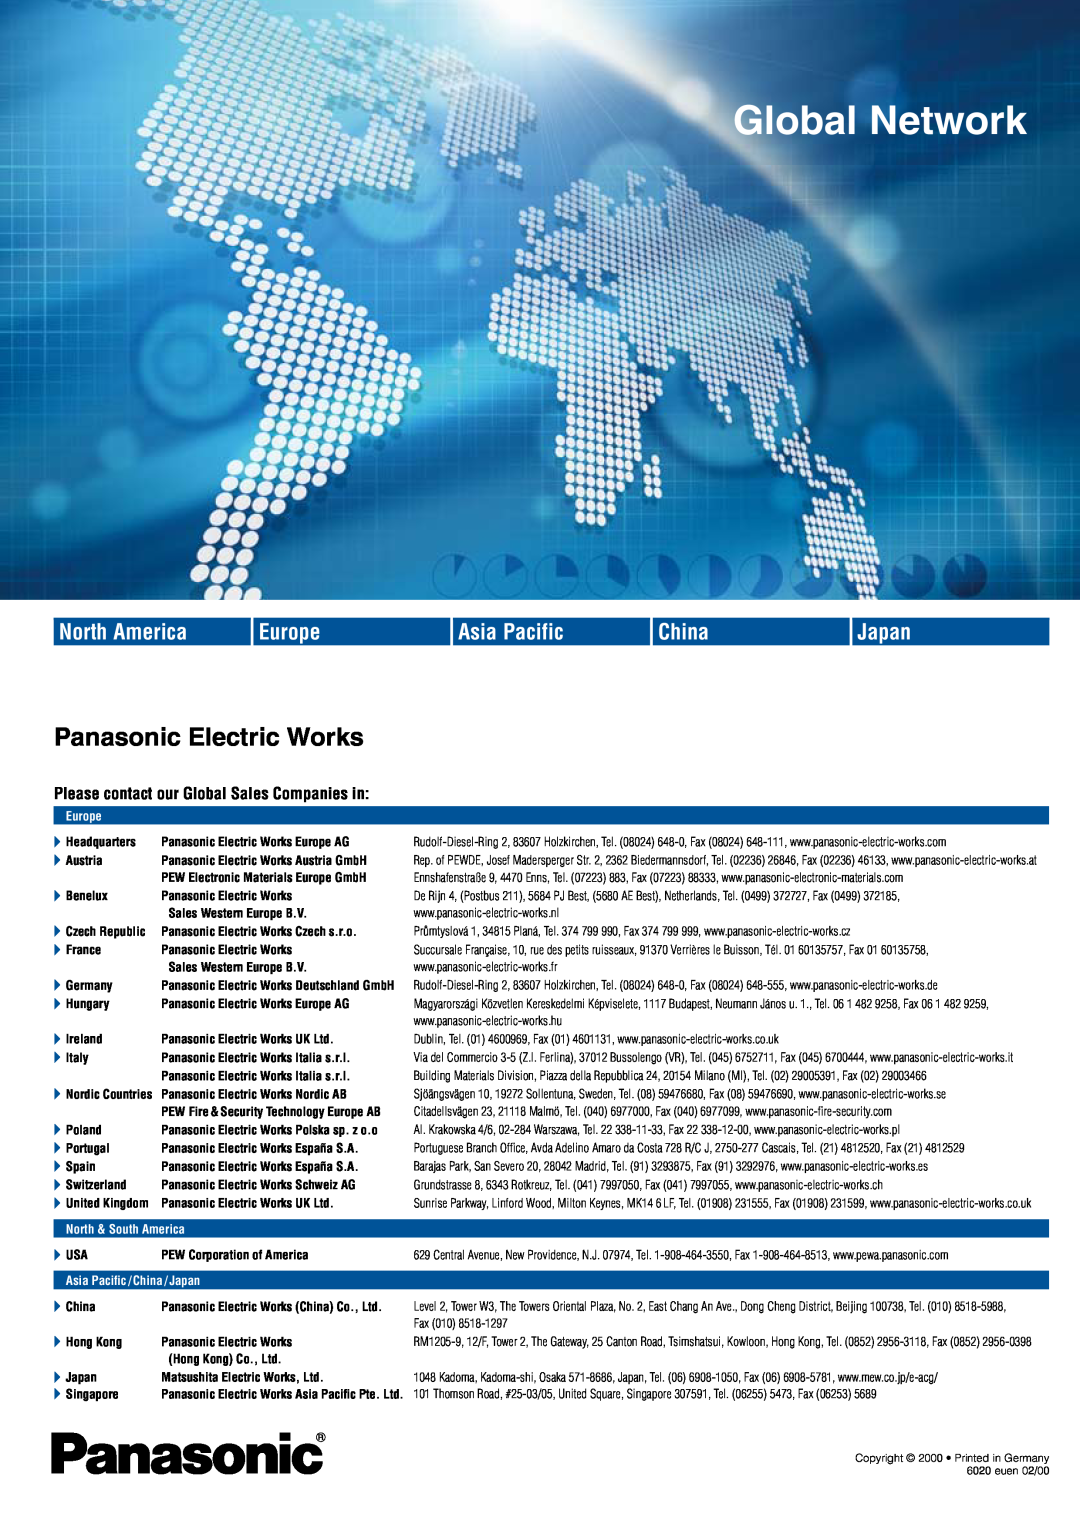 Panasonic TB5560187 North America, Europe, Asia Pacific, China, Global Network, Panasonic Electric Works, Japan 